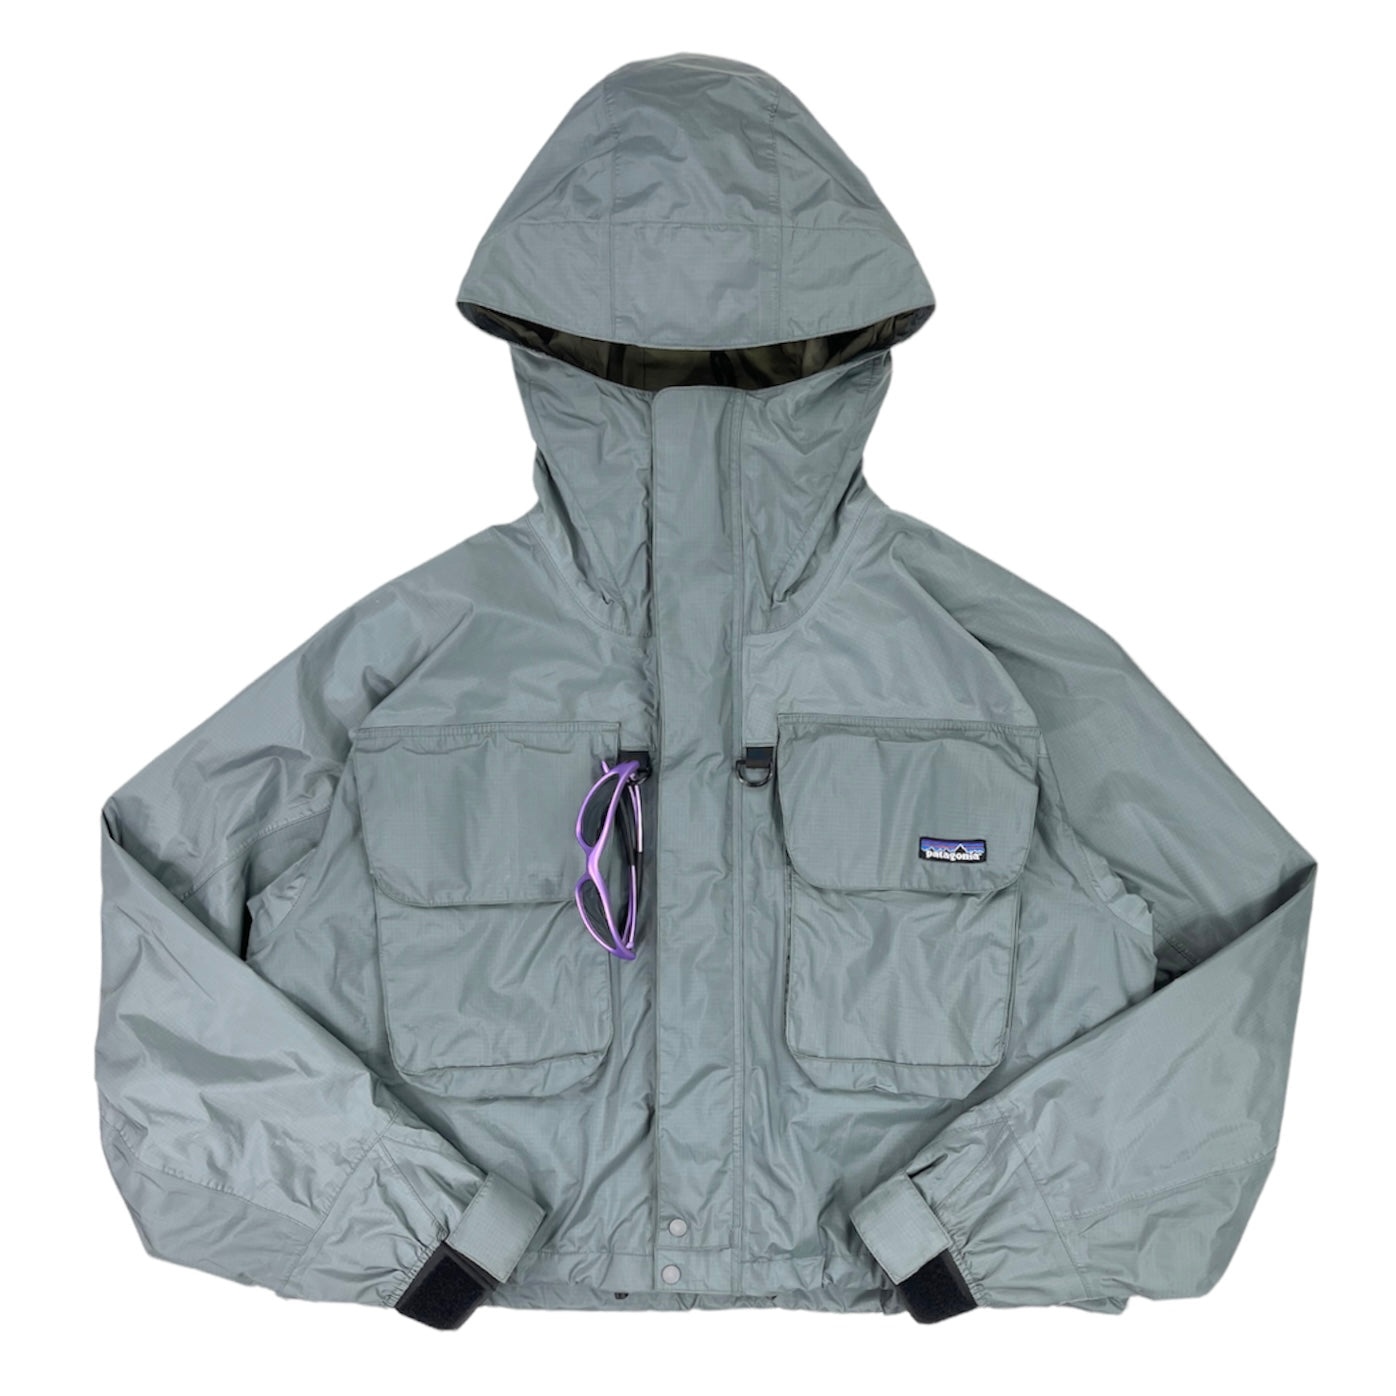 2003 Patagonia SST wading jacket – insidetag